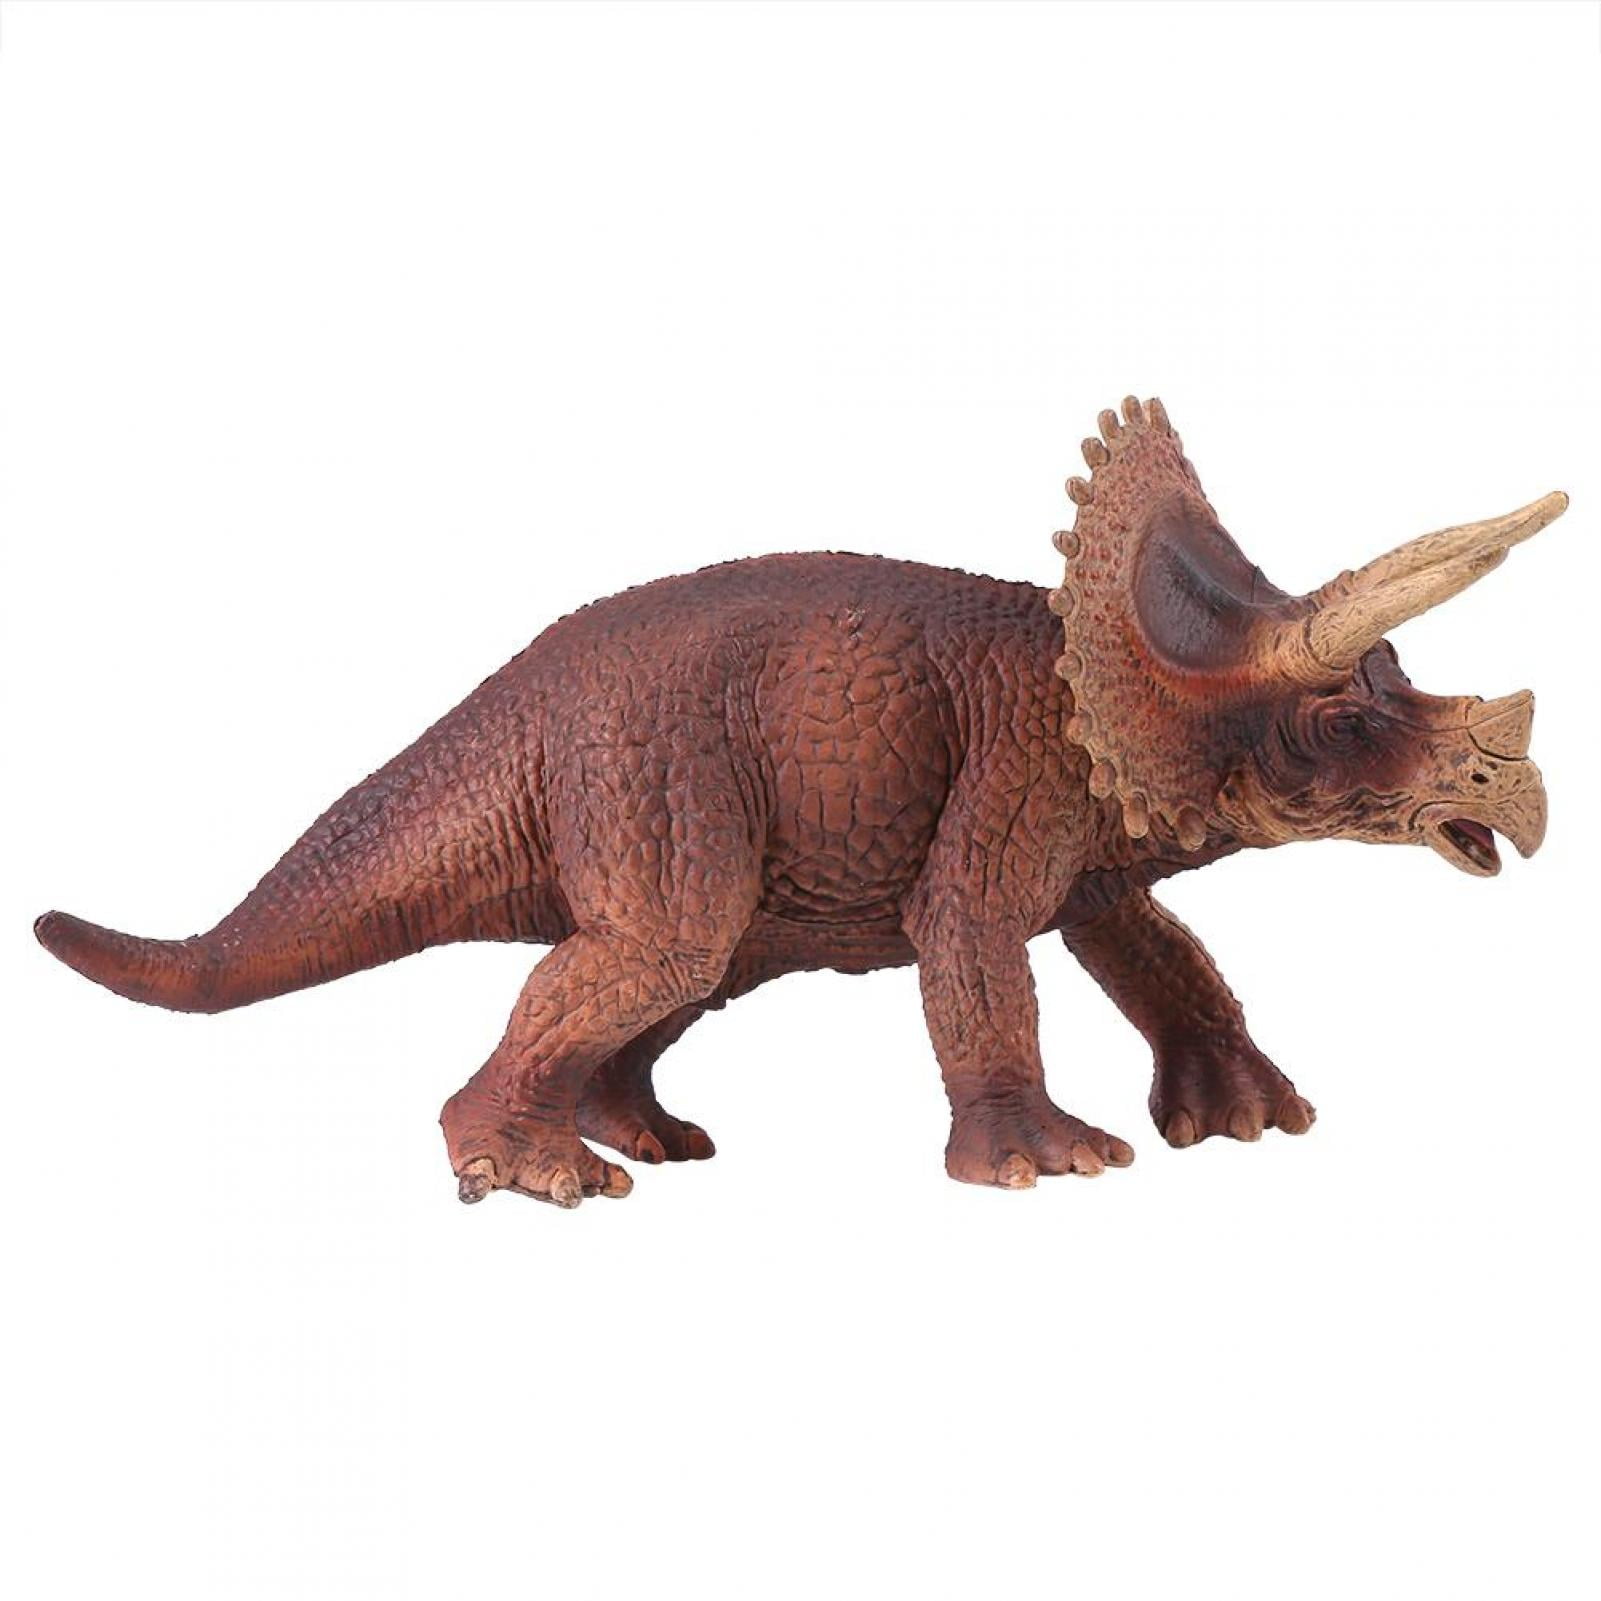 Mojo BRONTOSAURUS DINOSAUR model figure toy Jurassic prehistoric figurine gift 